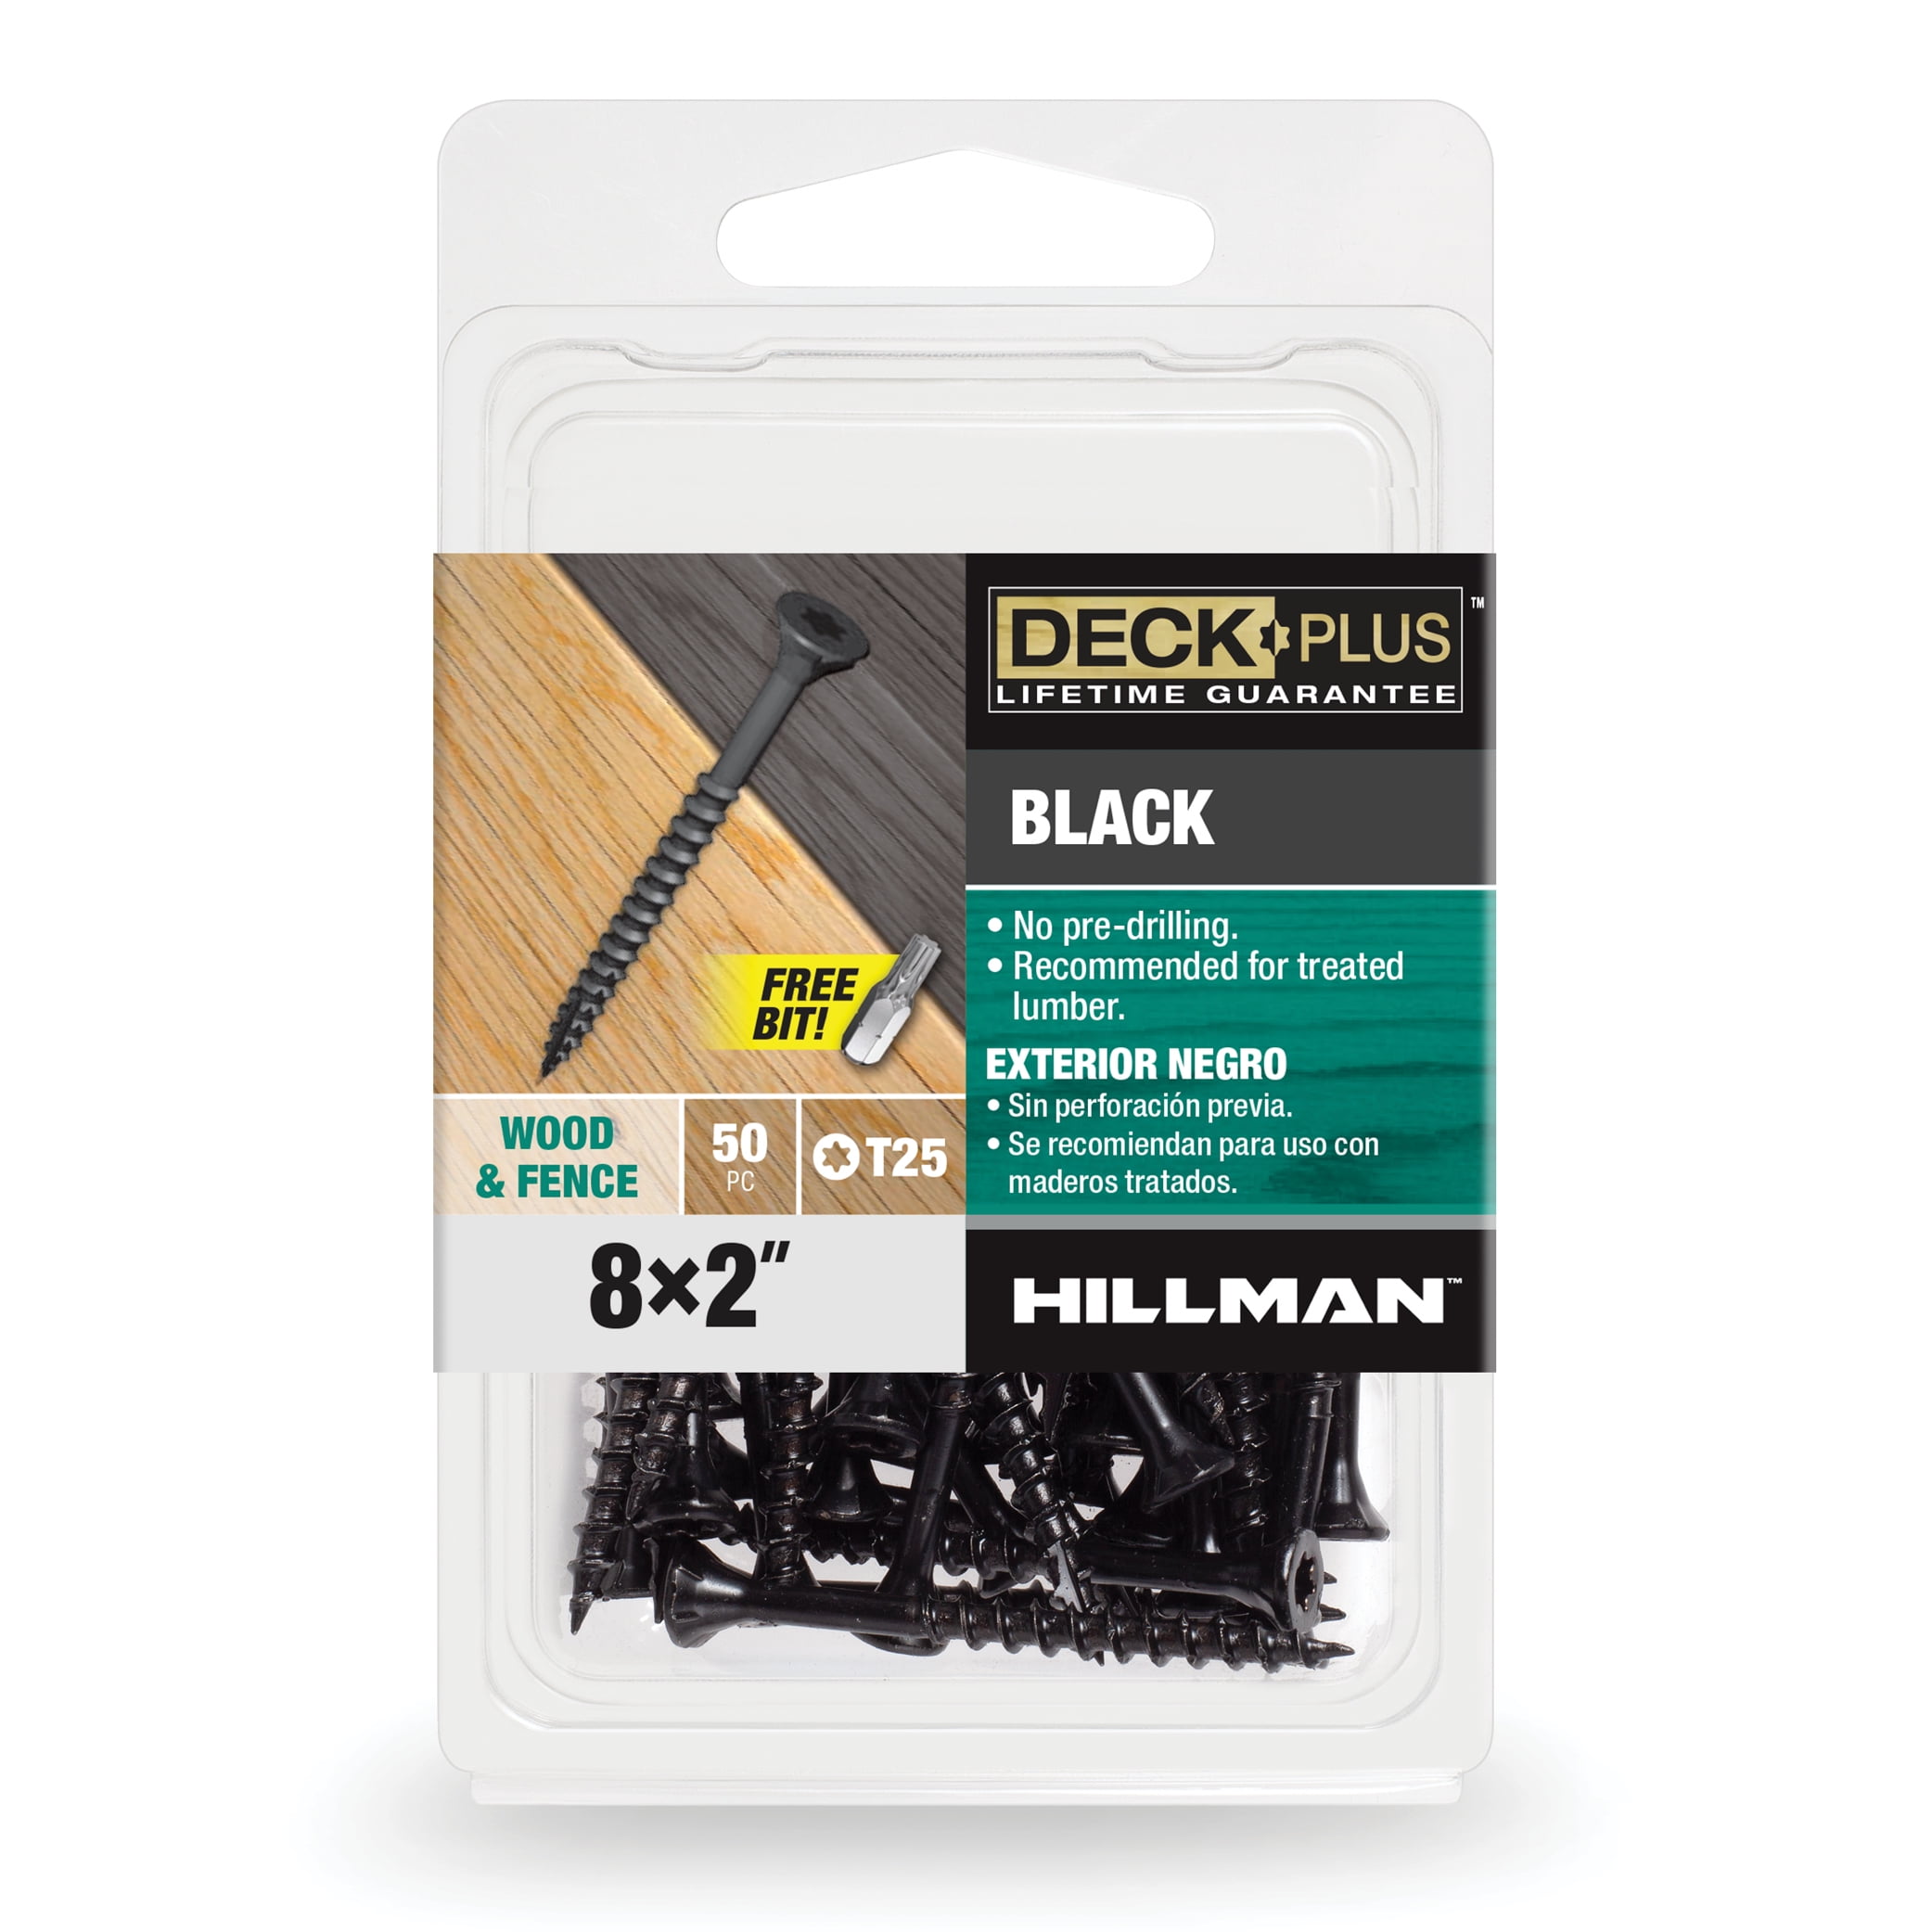 DeckPlus Wood and Fence Screws, Exterior Screws, Steel, Black Finish, 8 x 2", 50 Pieces